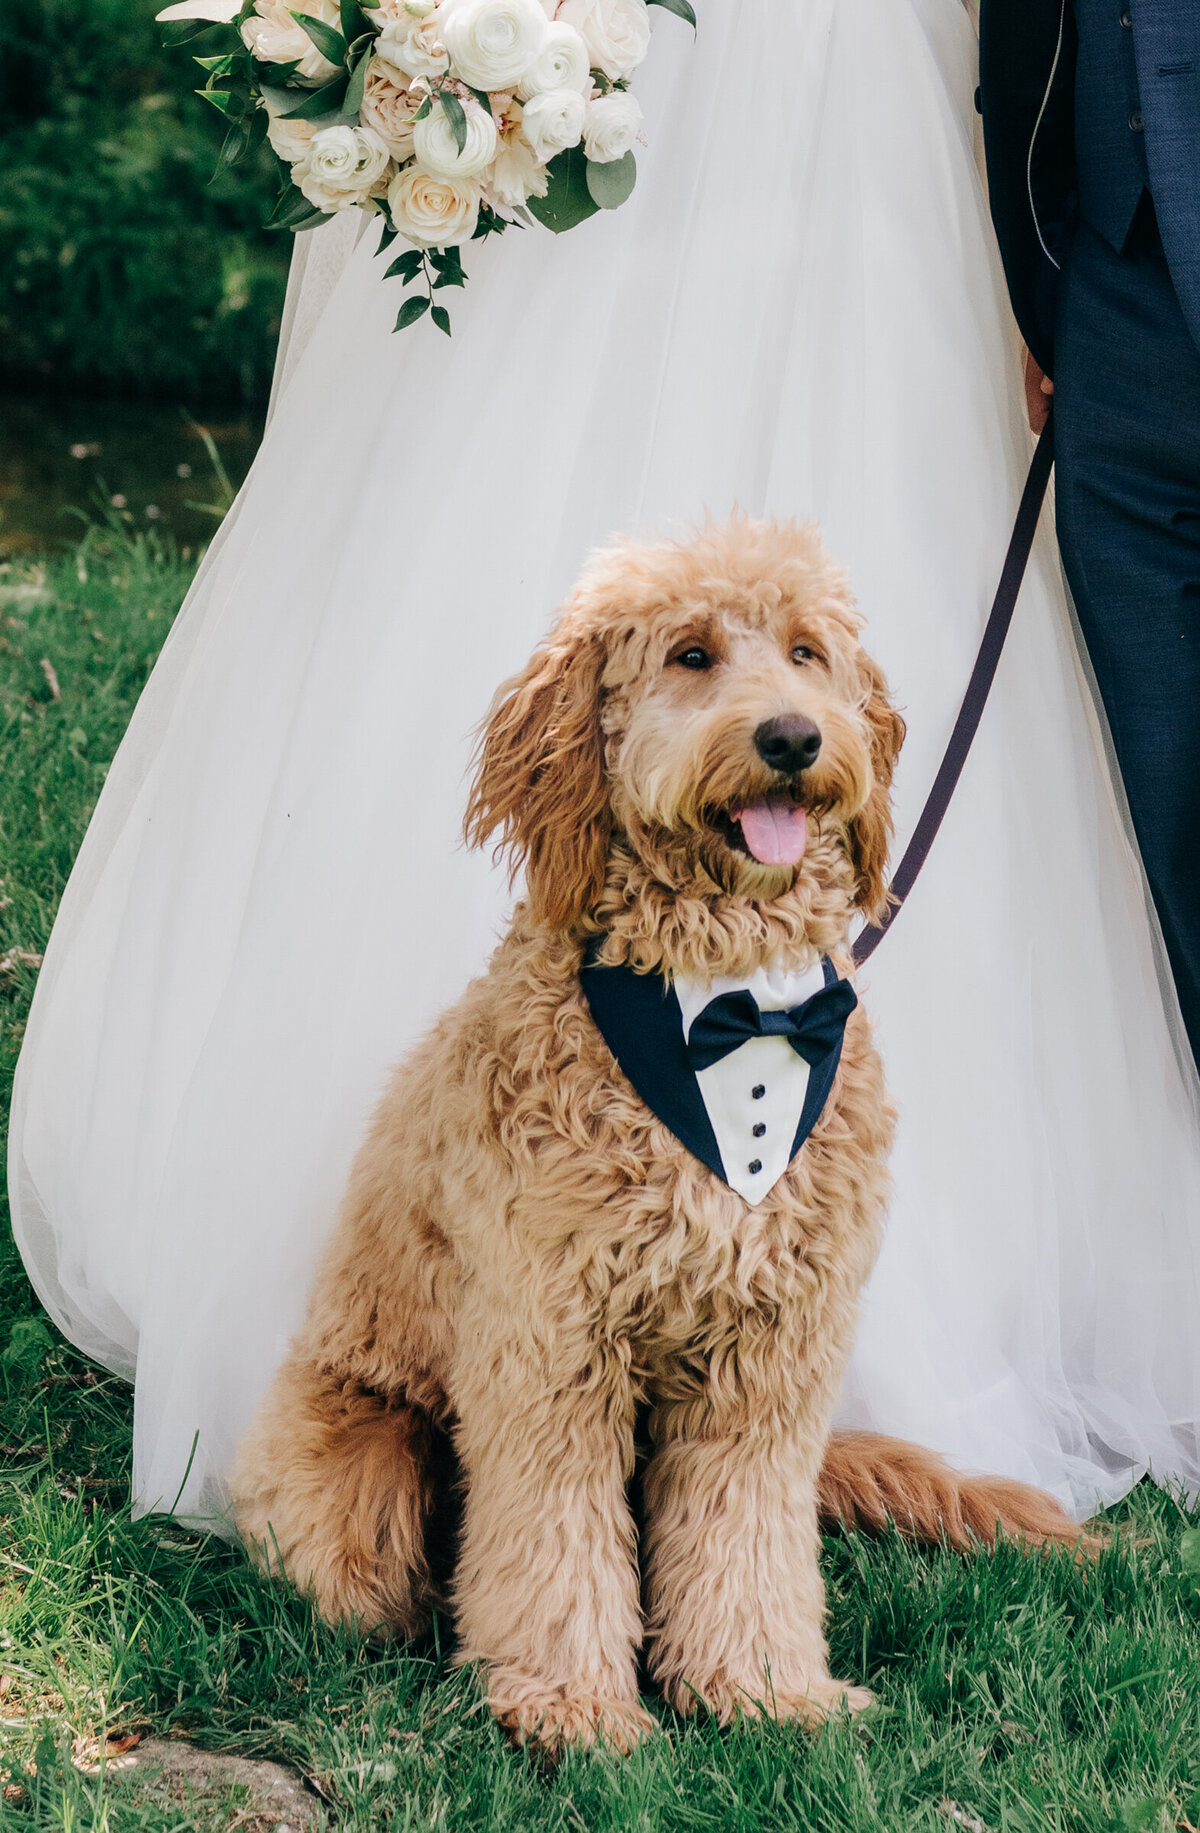 Dog dressed in tuxedo for wedding portraits photographed by Nova Markina